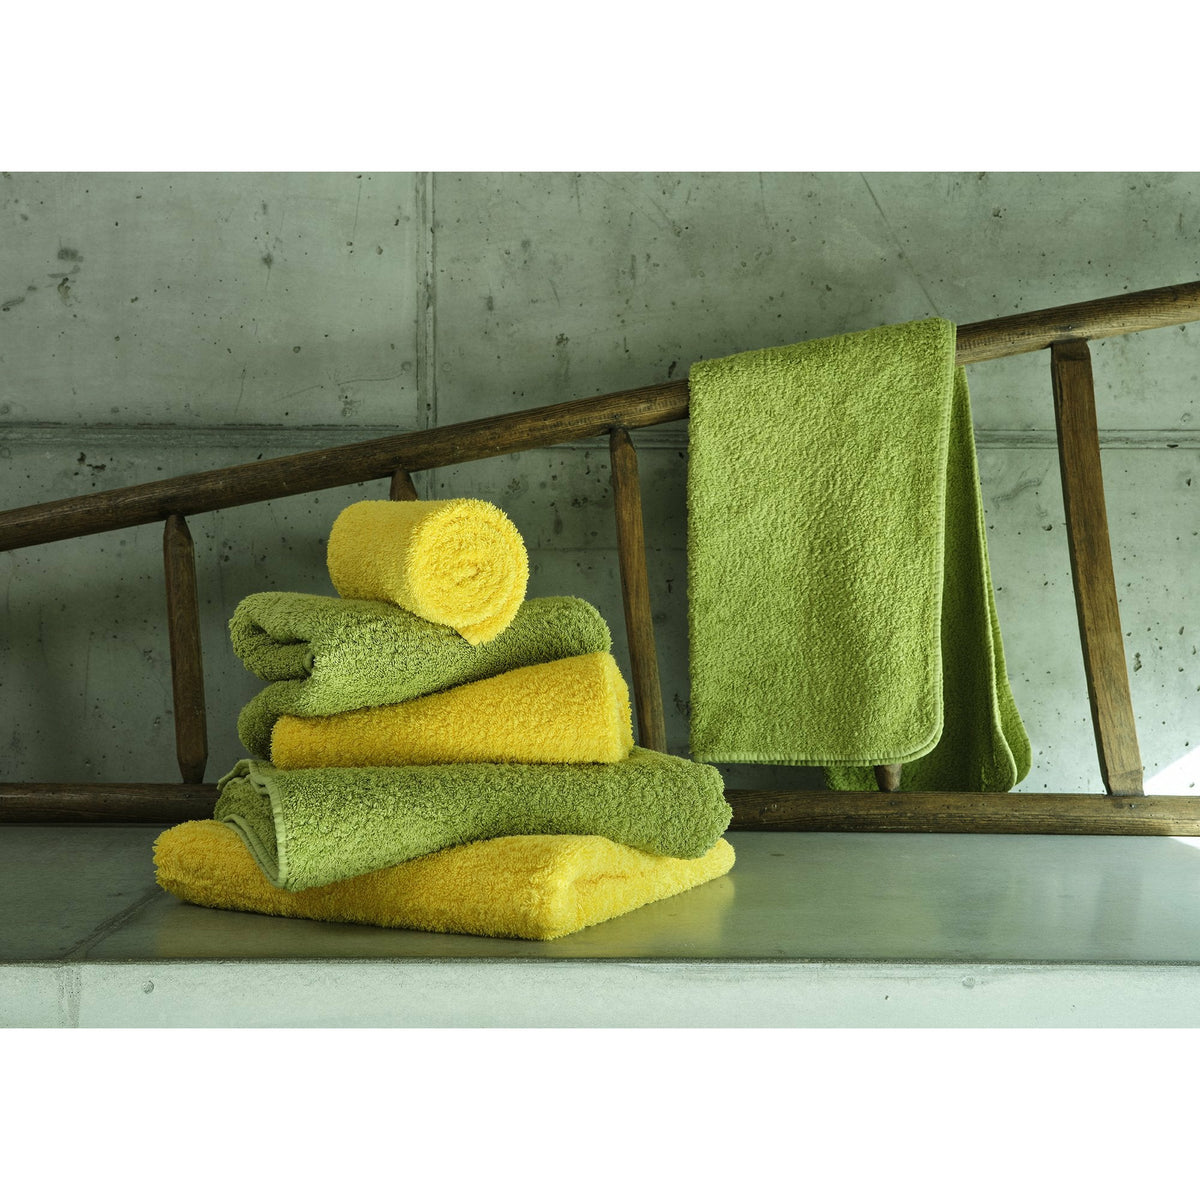 Tea Towel Set of 4 - Ecru/Black/Gray/Yellow